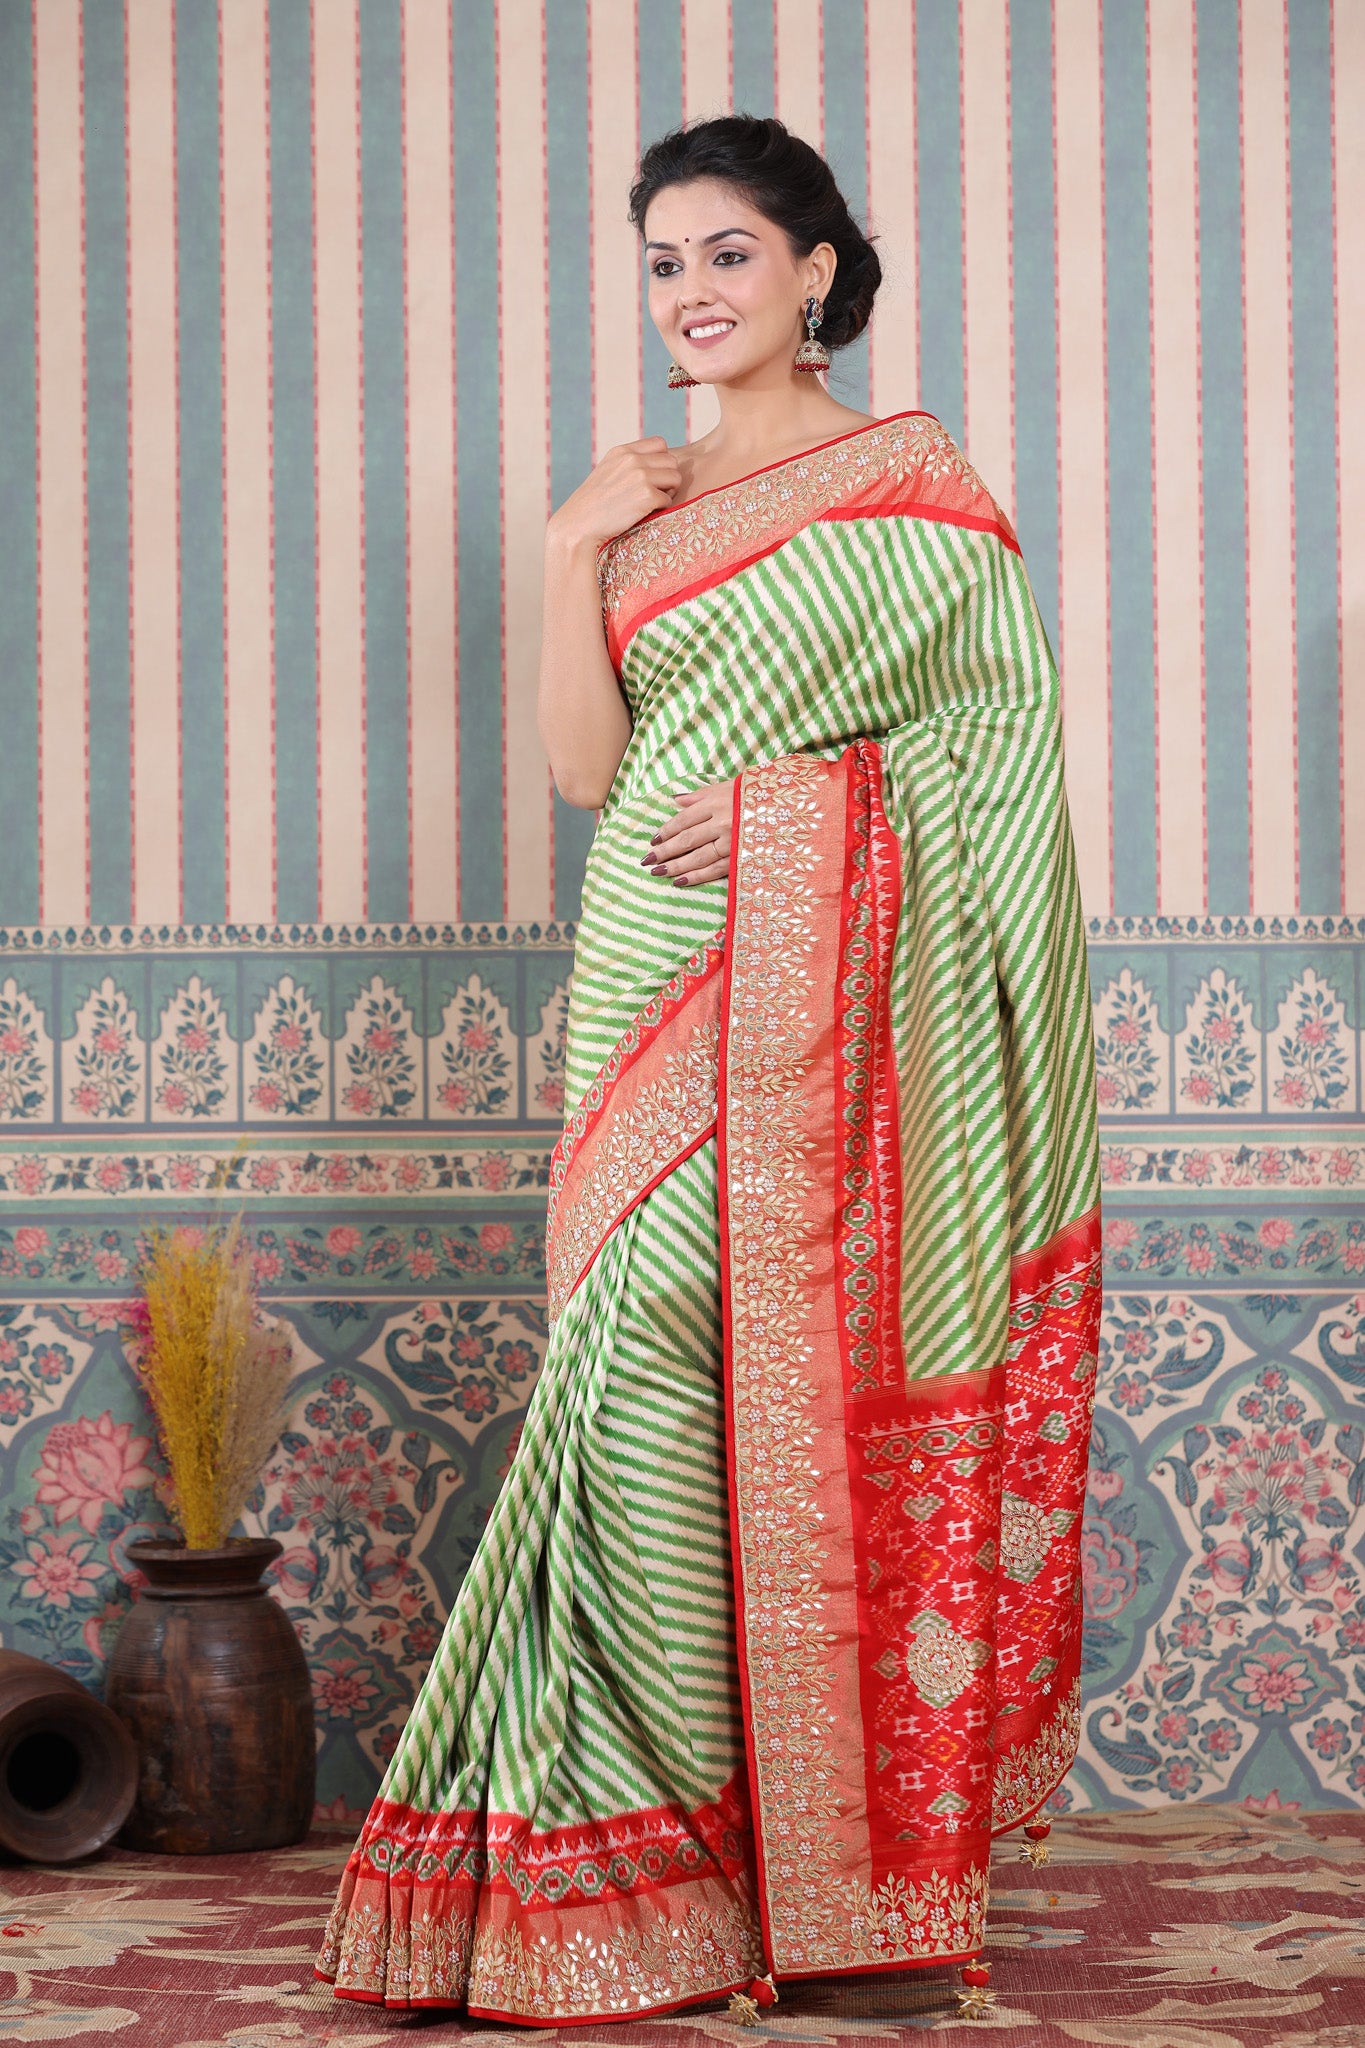 Silk Saree : Buy Latest Indian Silk Sarees Online USA at Lowest Price